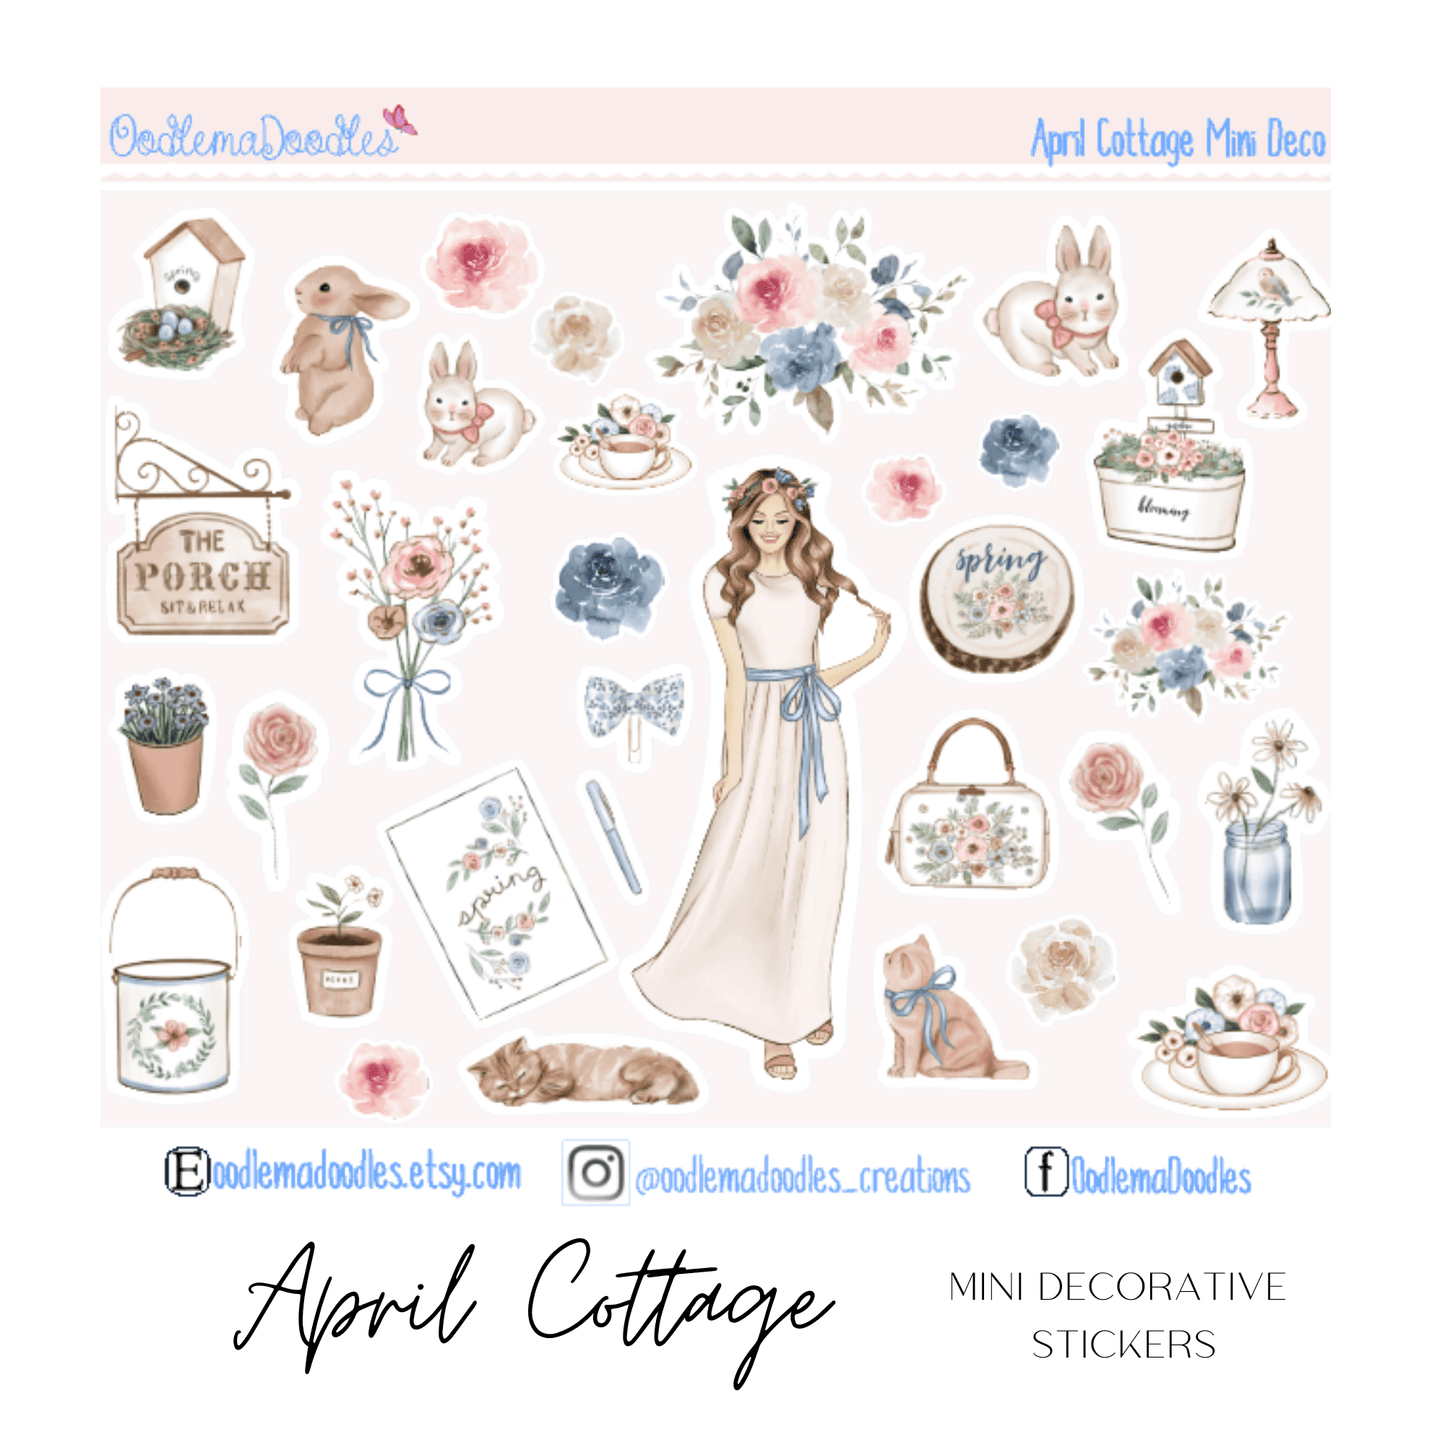 April Cottage Mini Decorative Stickers - oodlemadoodles